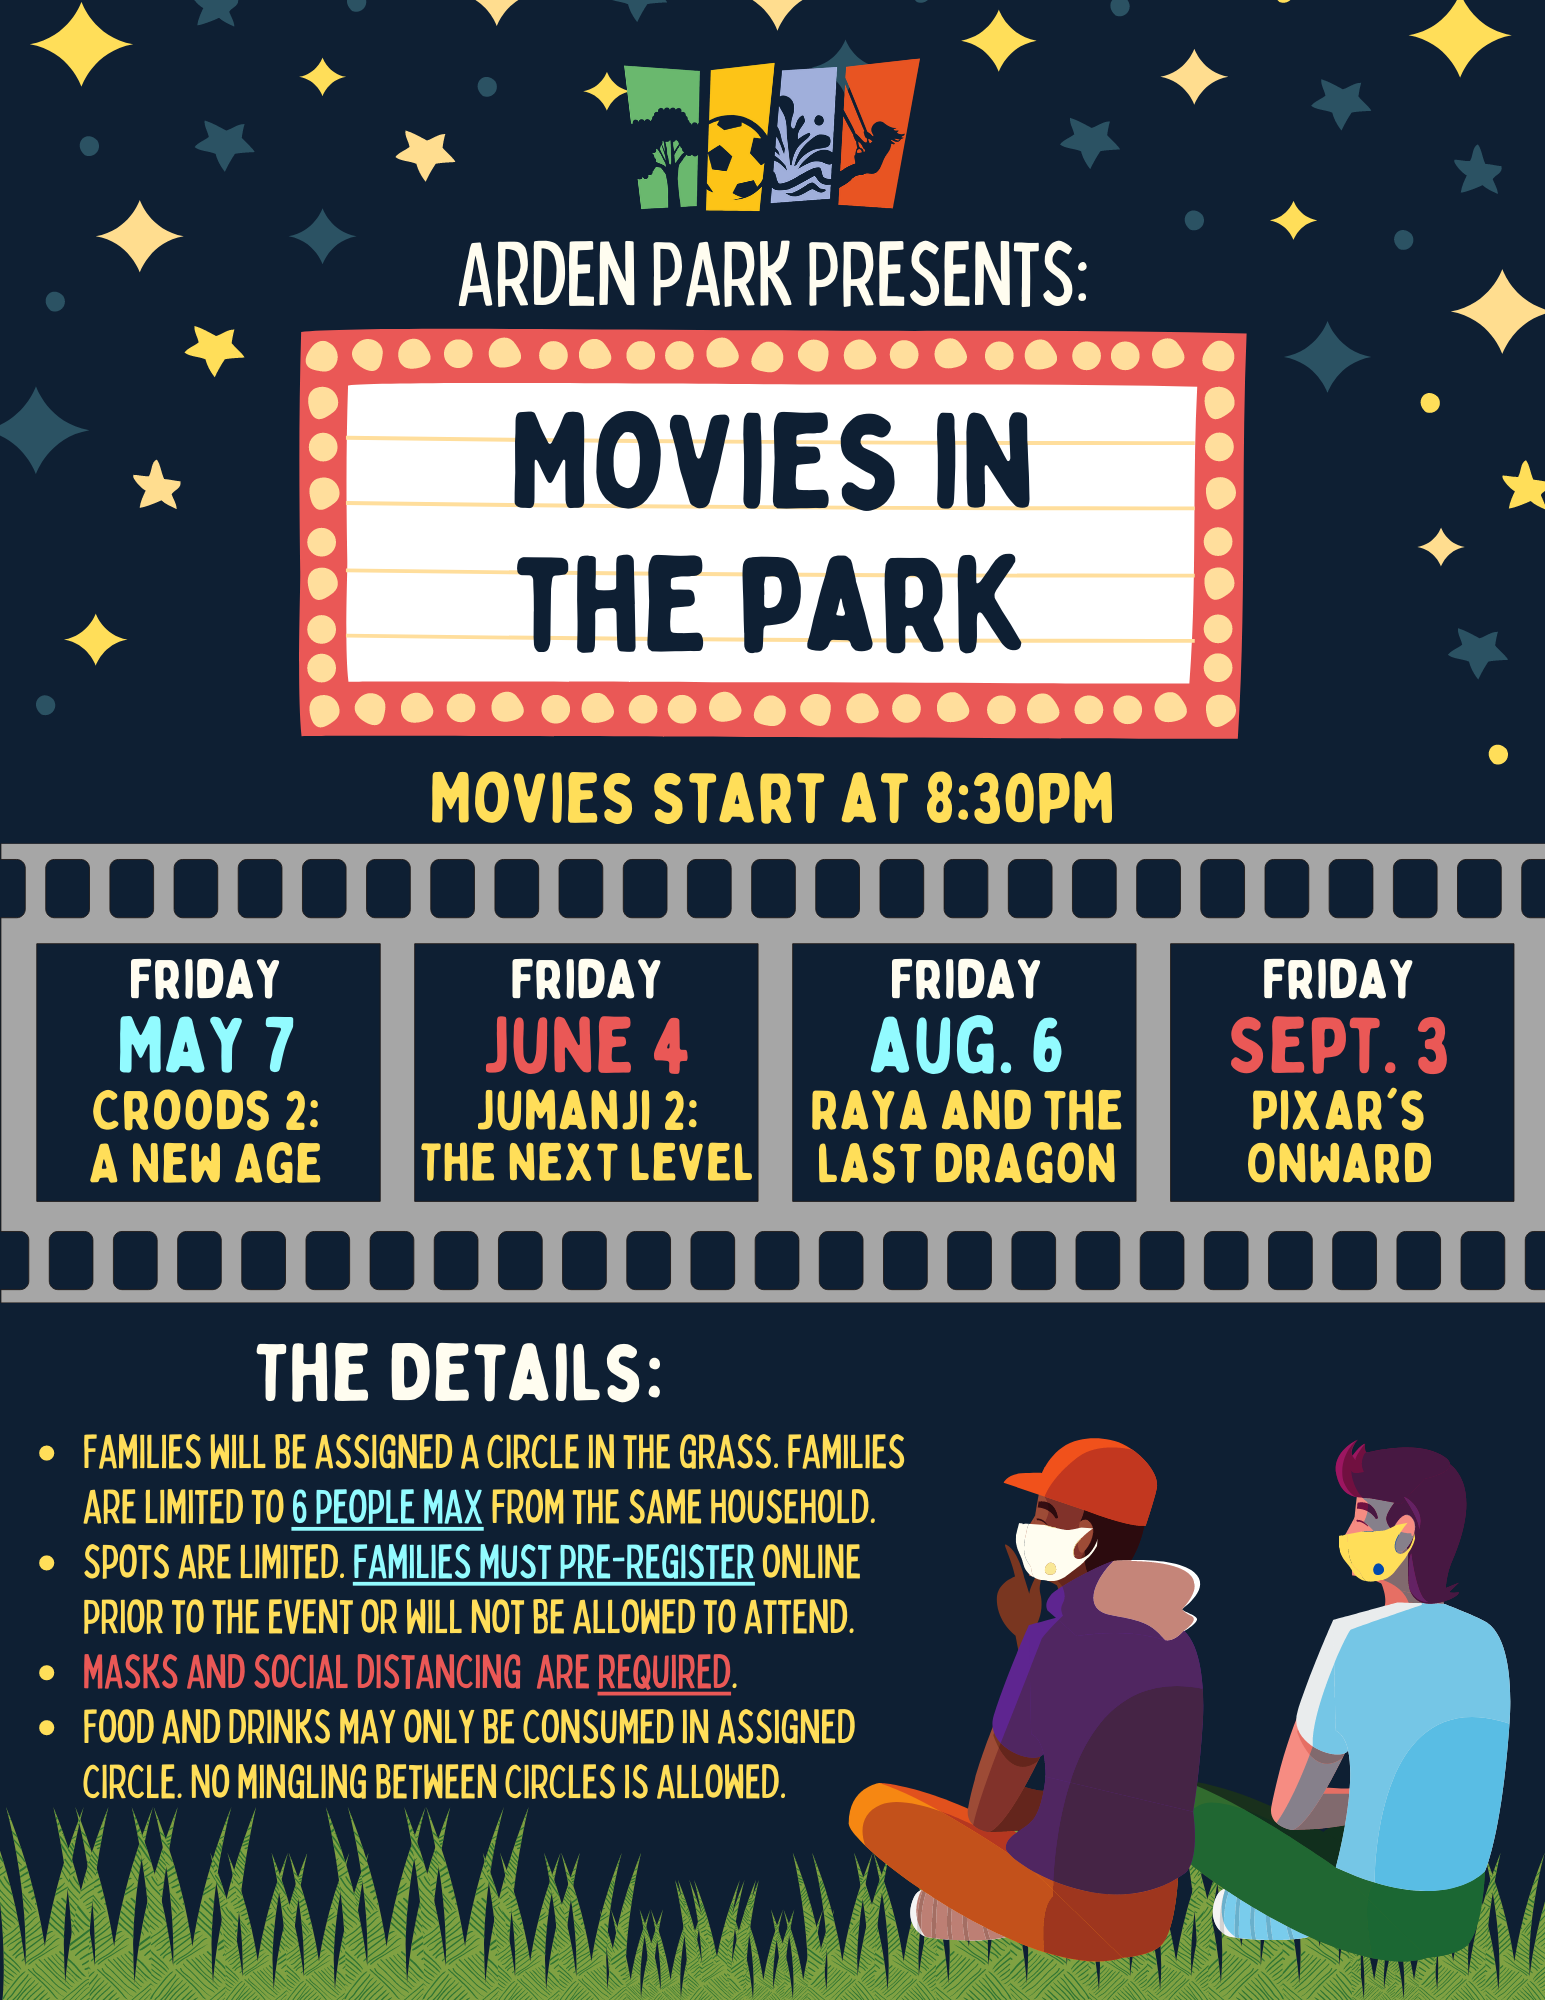 Arden Park Presents Movies In The Park Arden Park Recreation And Park District At Arden Park Sacramento Ca Community